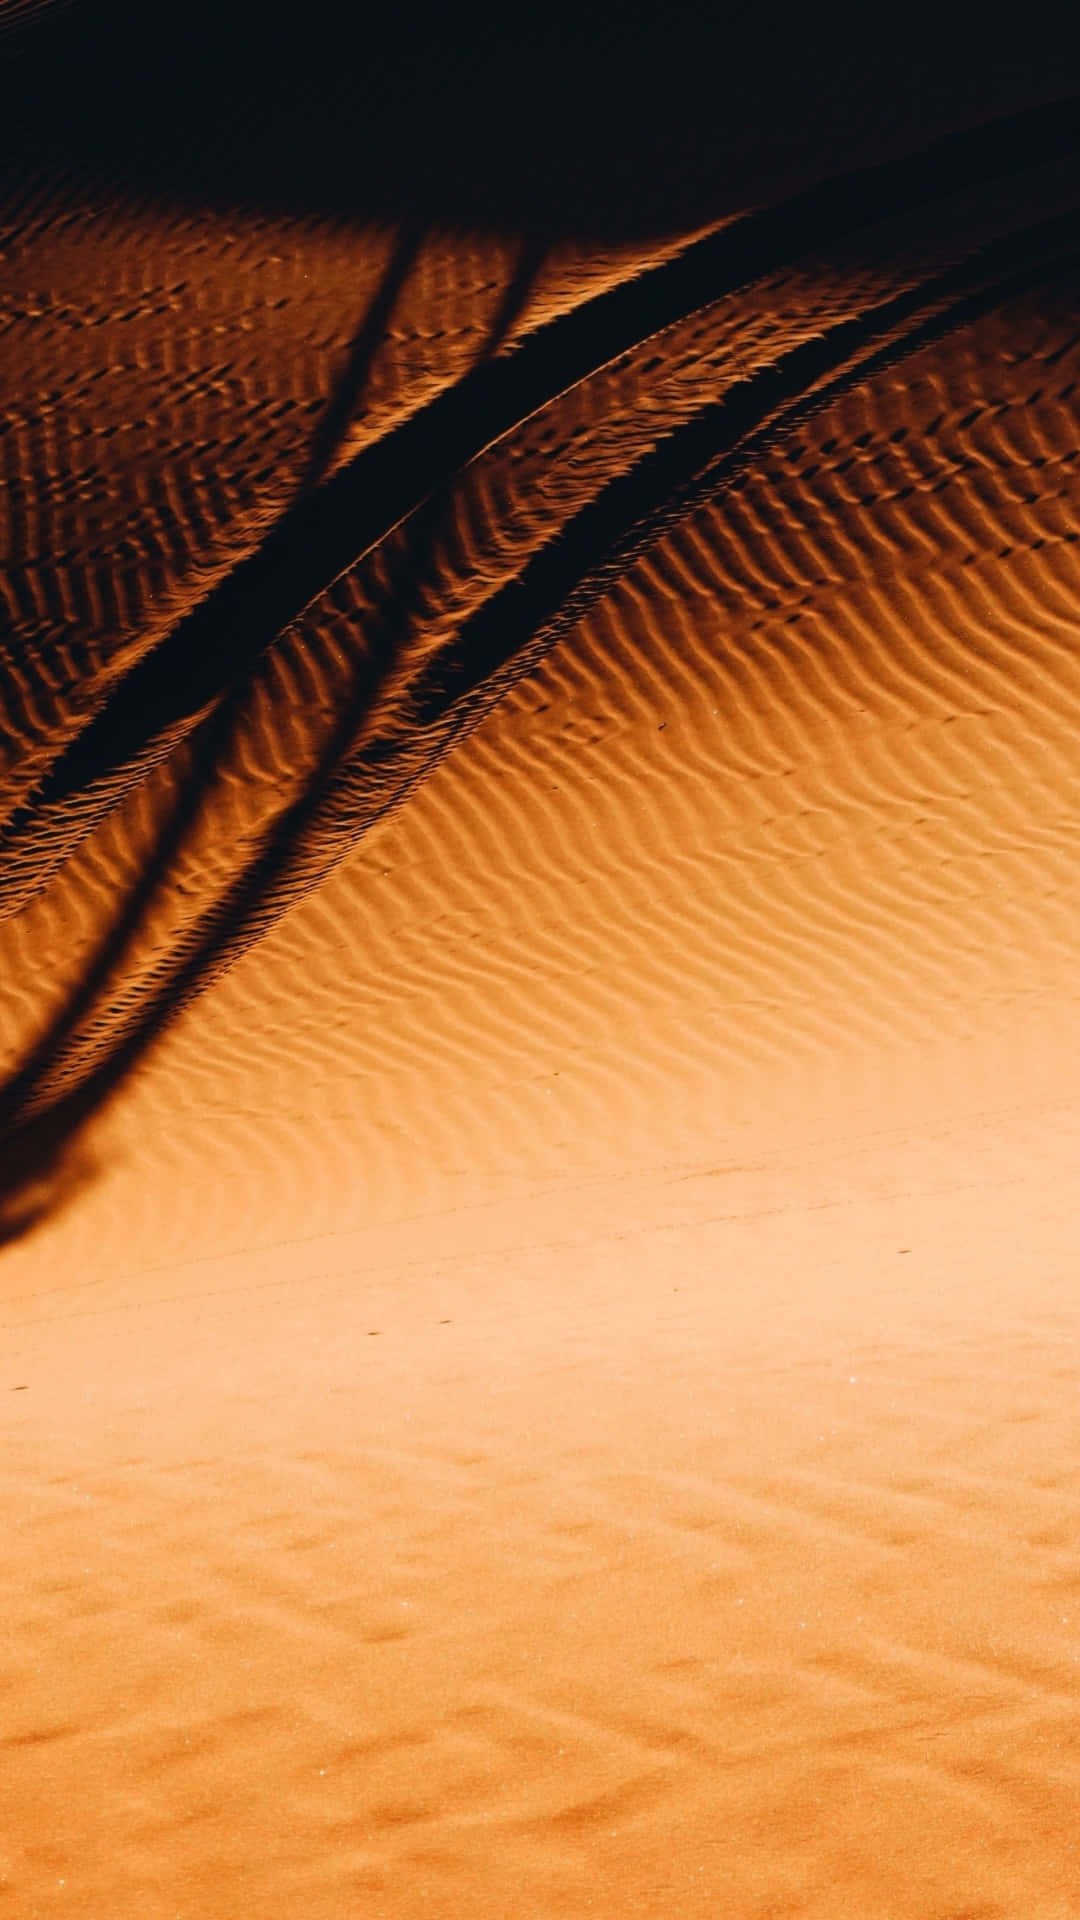 Nyd naturen fra ethvert sted med ørken Iphone tapet. Wallpaper